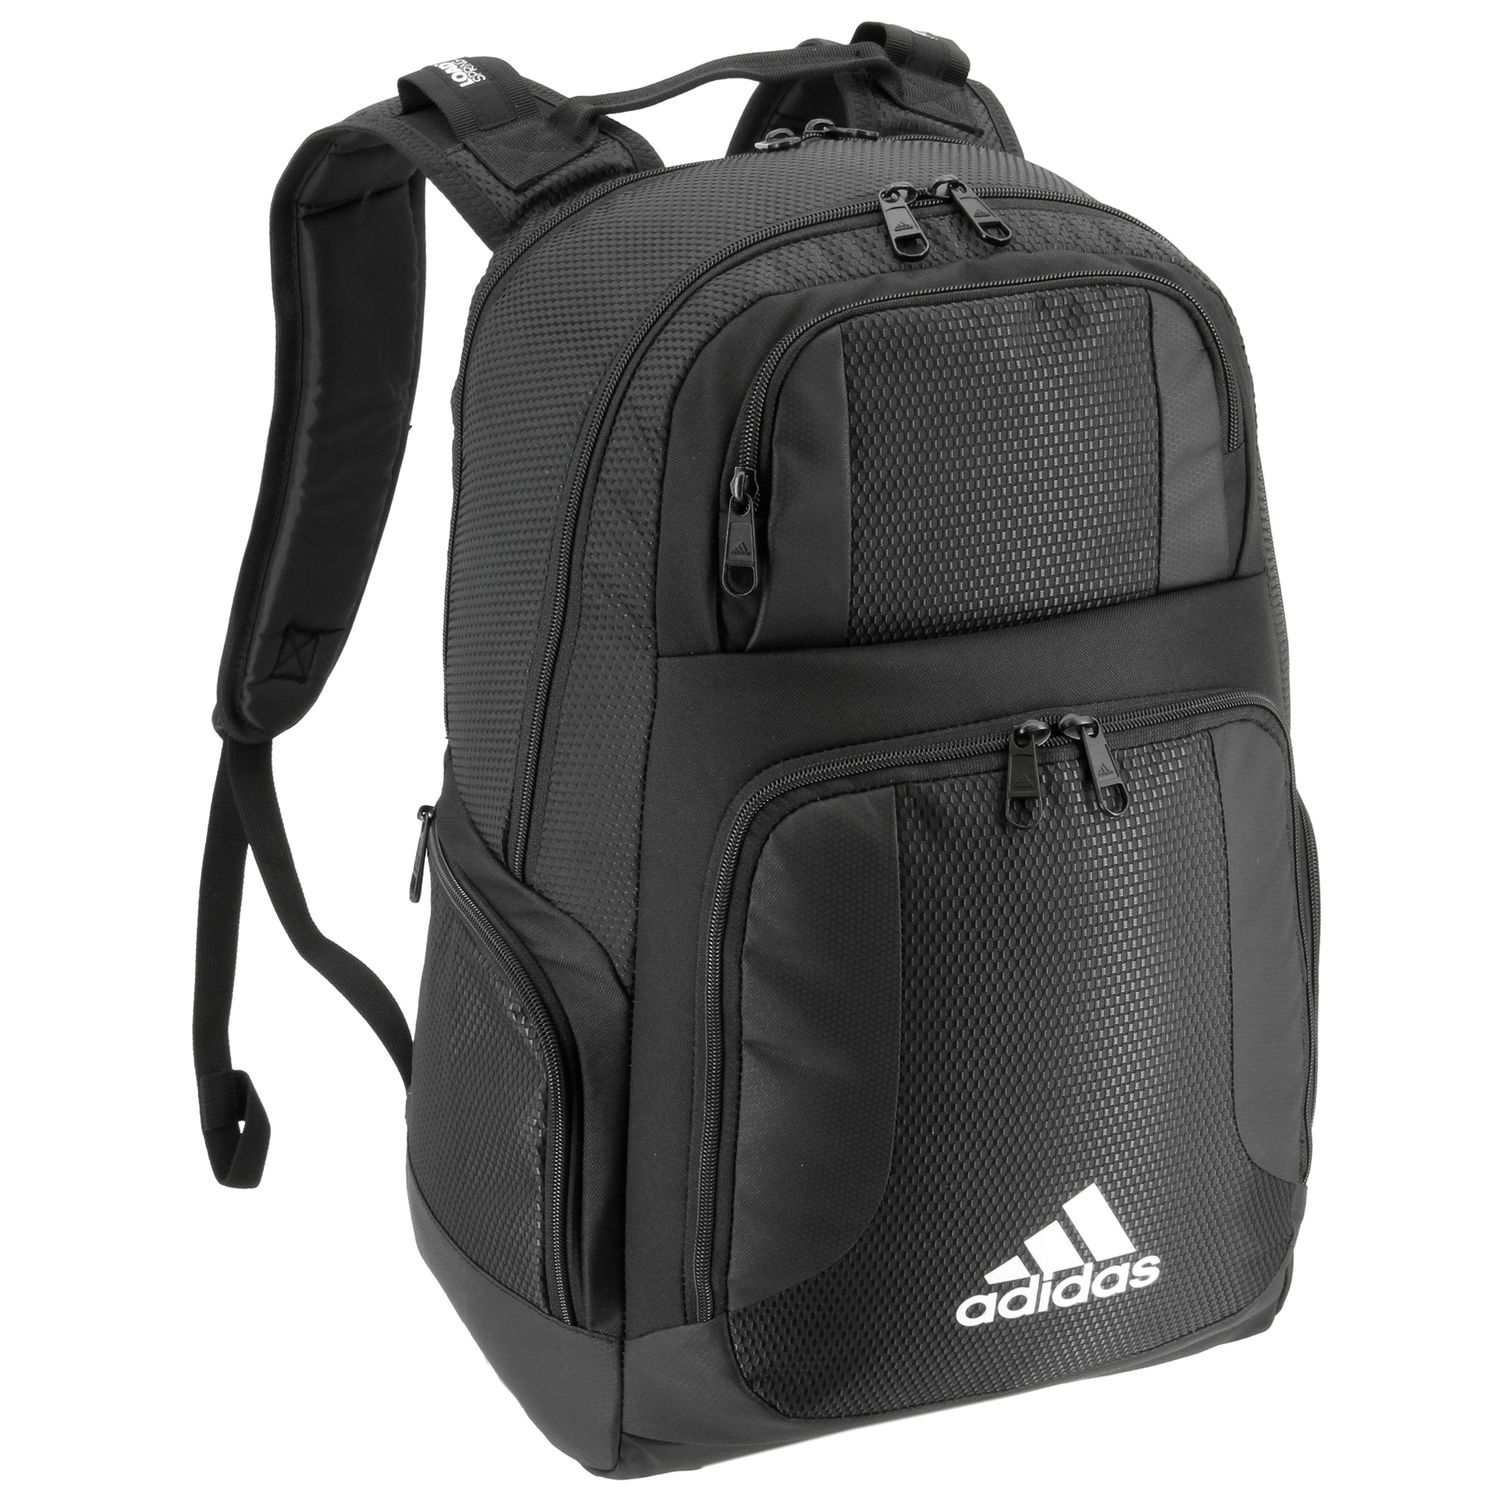 adidas strength iii backpack